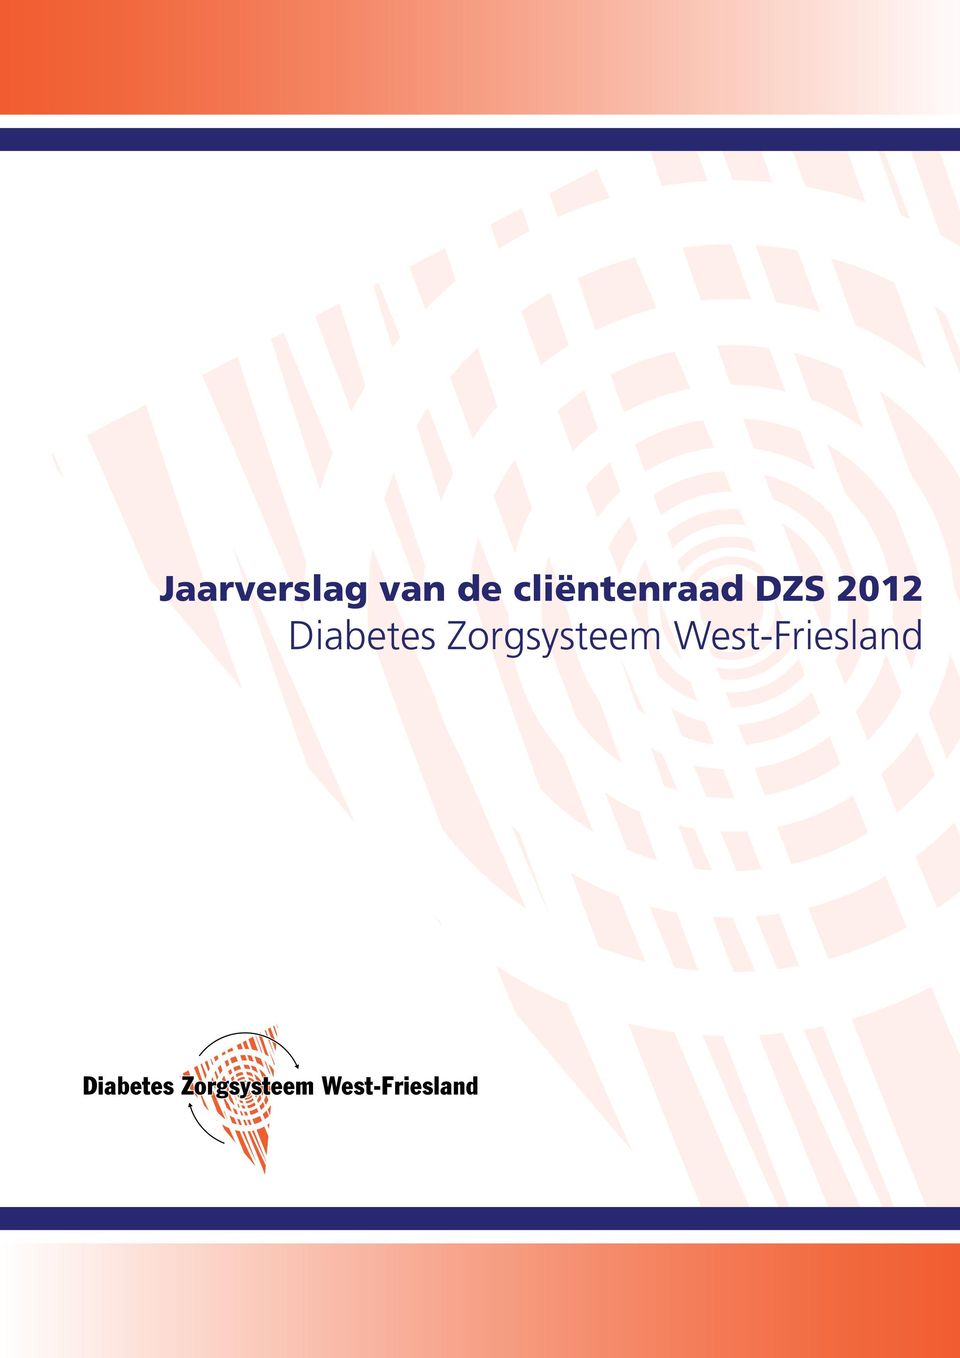 2012 Diabetes